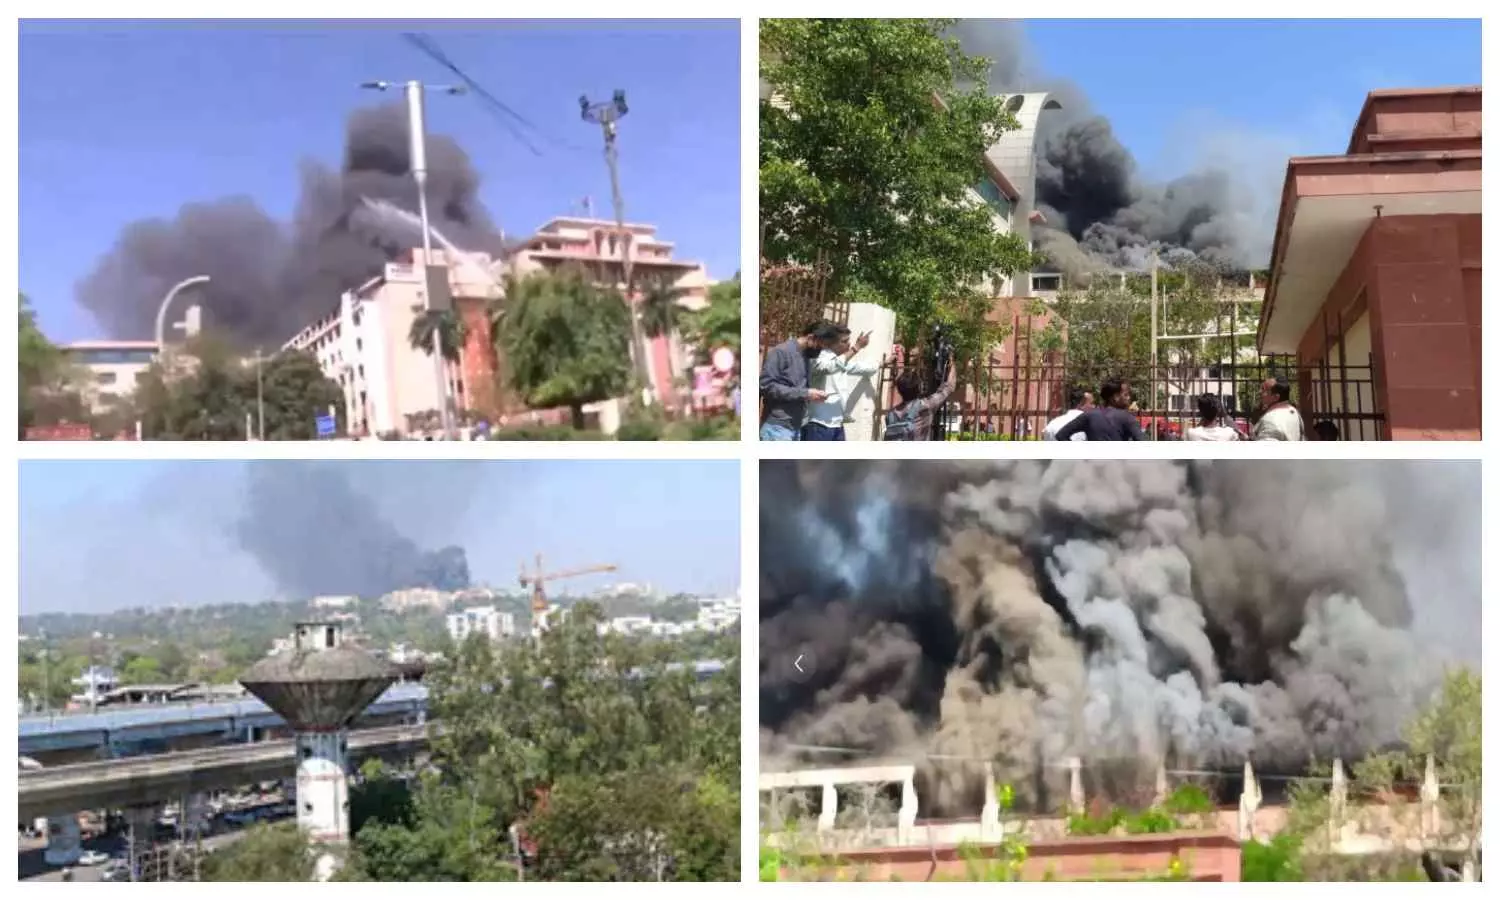 MP Secretariat Fire, massive fire in bhopal, mantralaya vallabh bhawan,